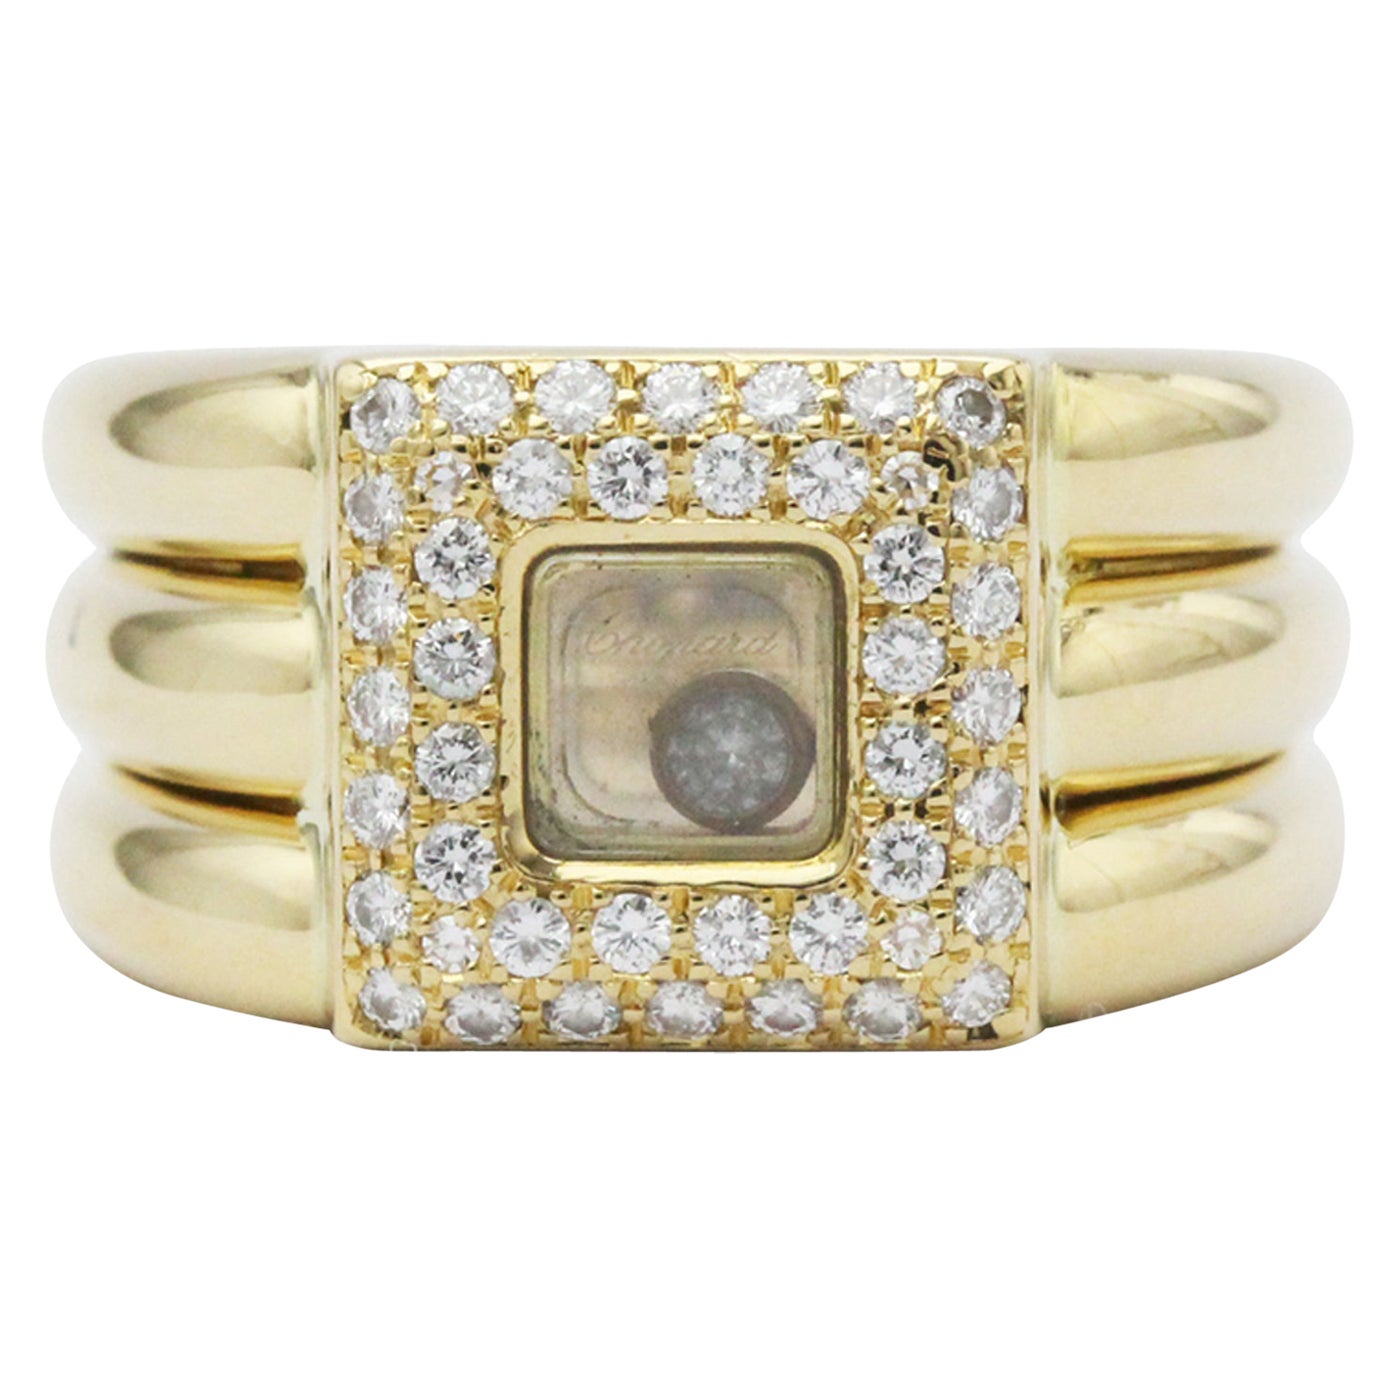 Chopard Fashion Diamond Band Ring in 18K Yellow Gold